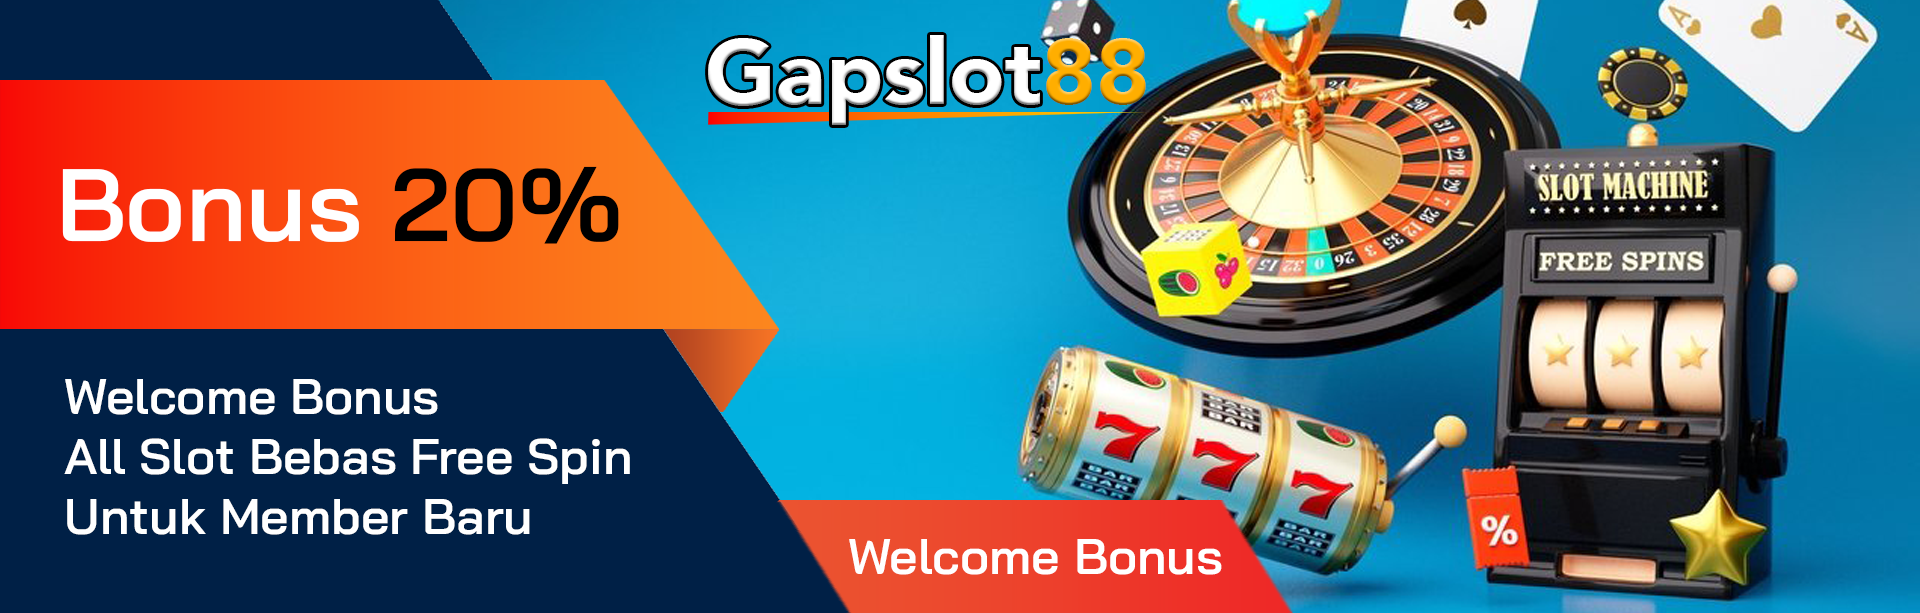 gapslot88 welcome bonus